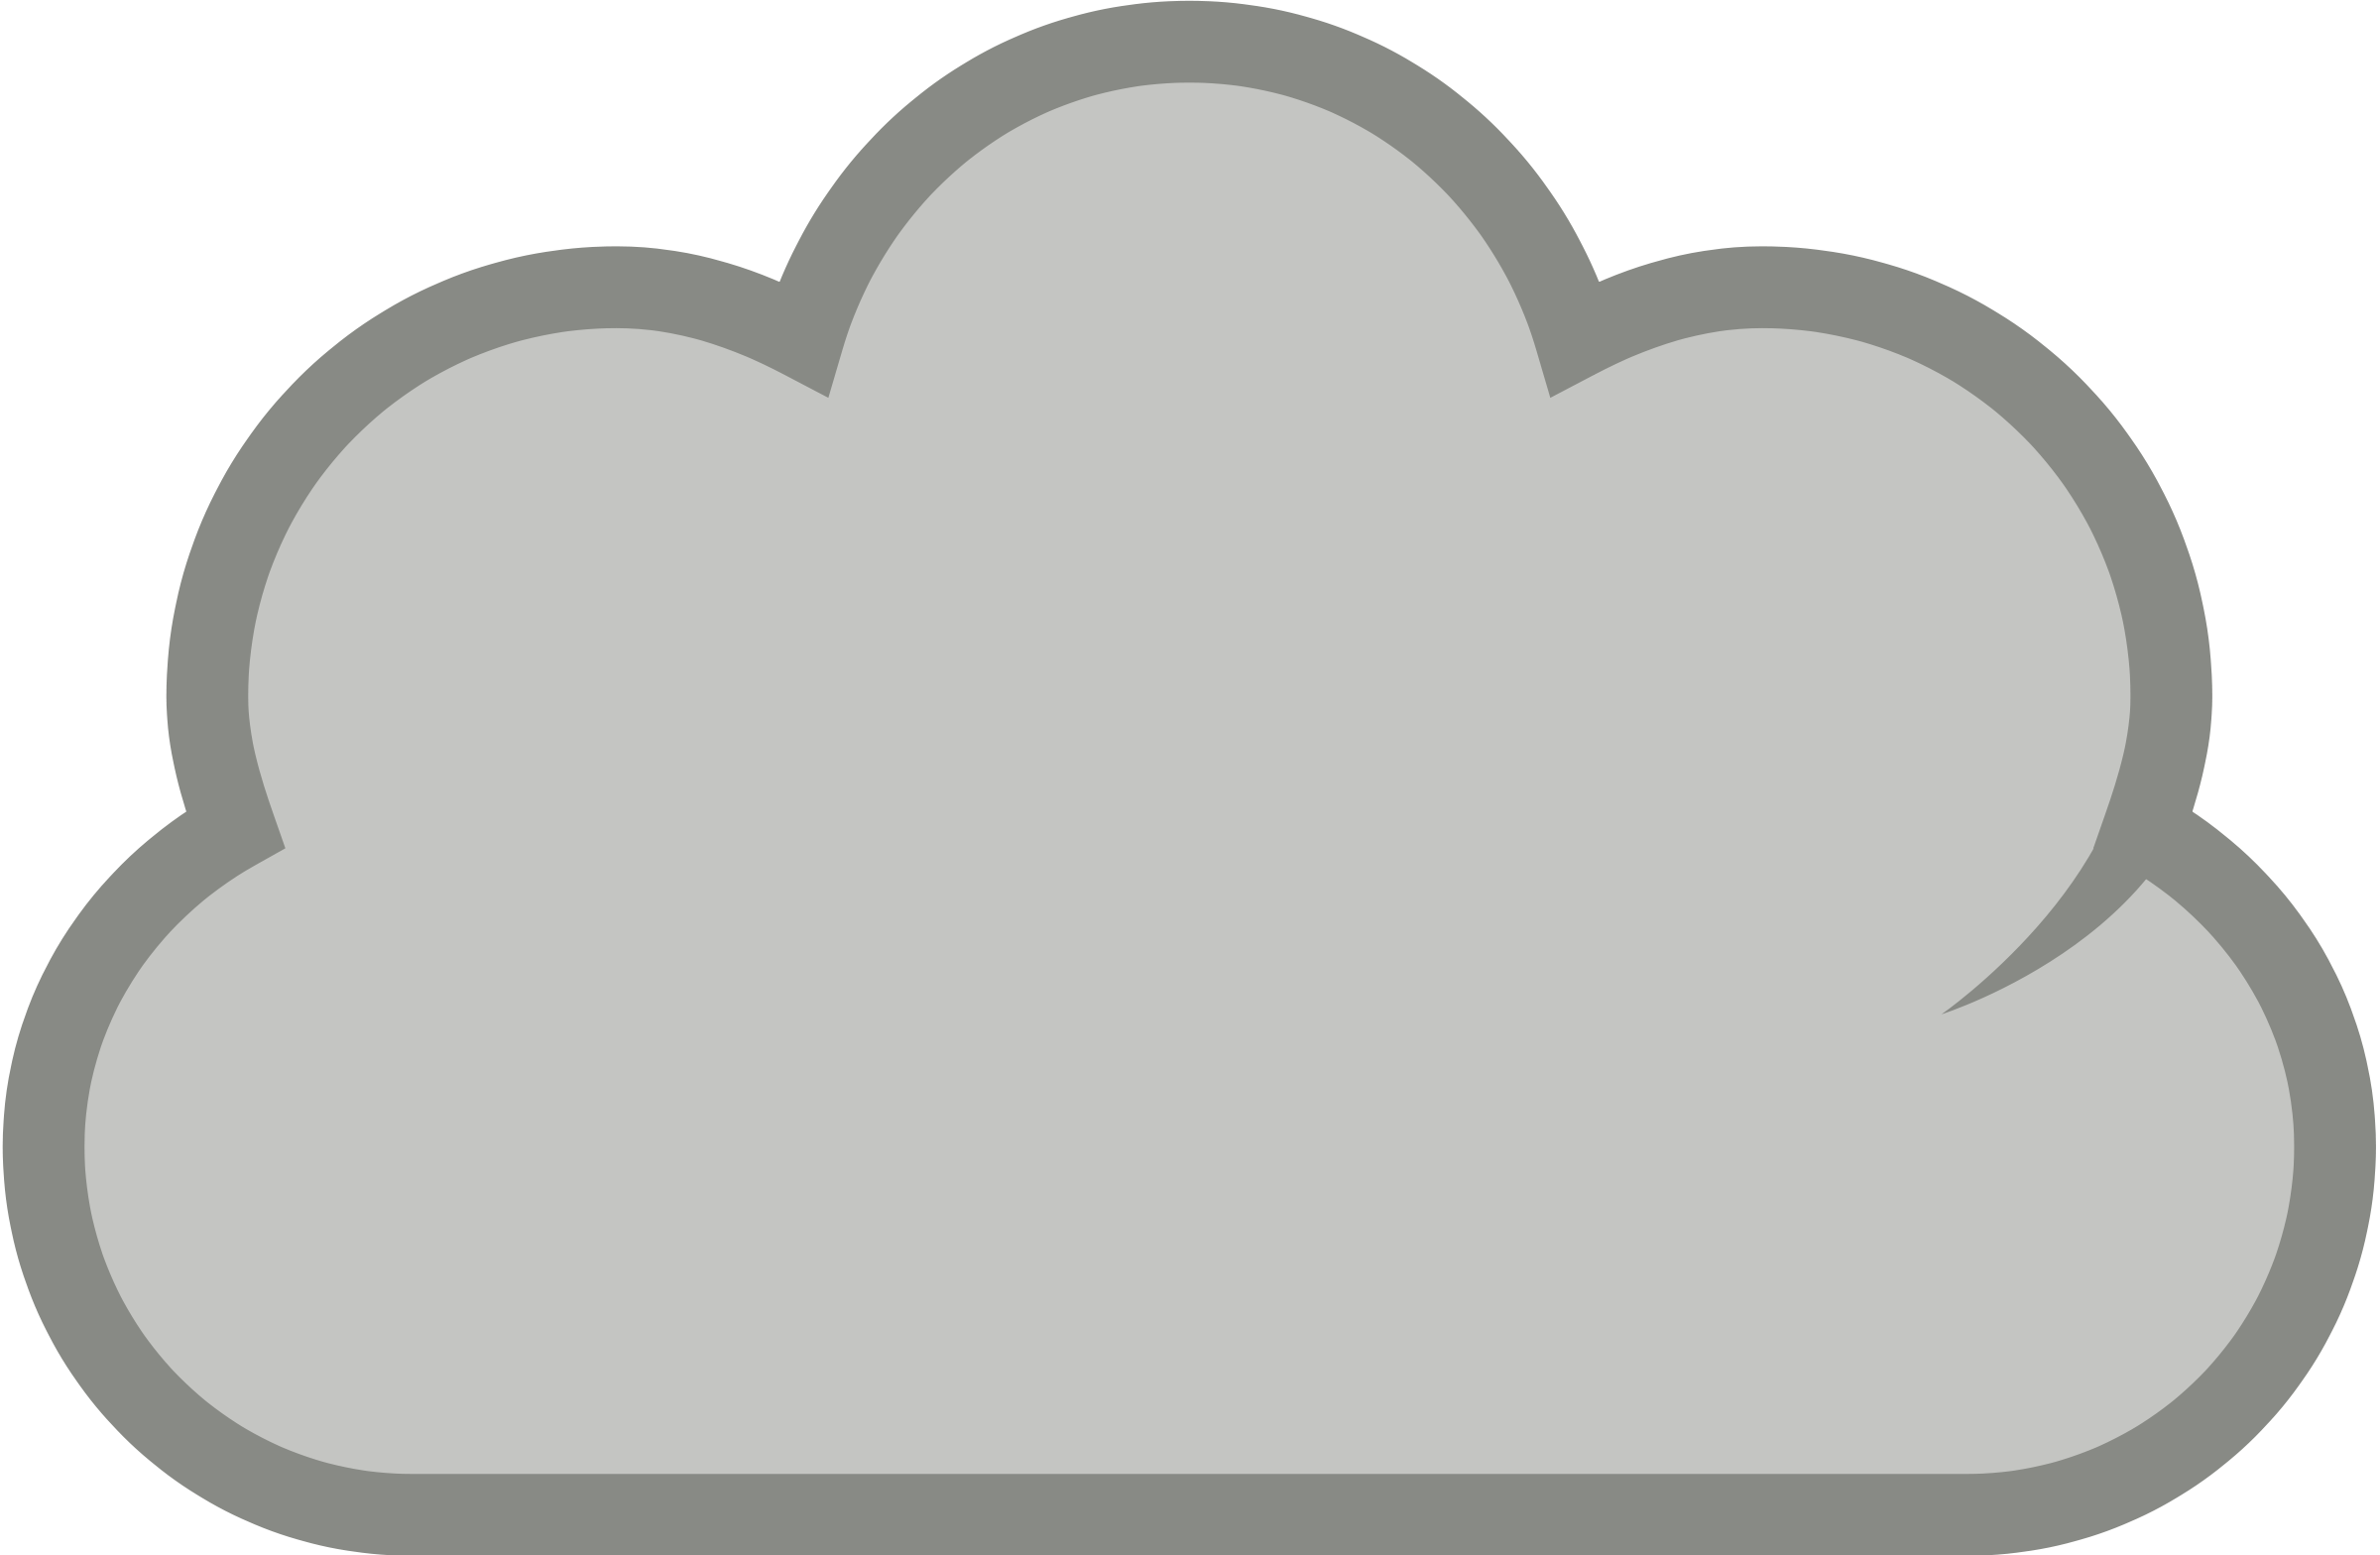 Free Cloud Clipart Transparent Background, Download Free Cloud Clipart